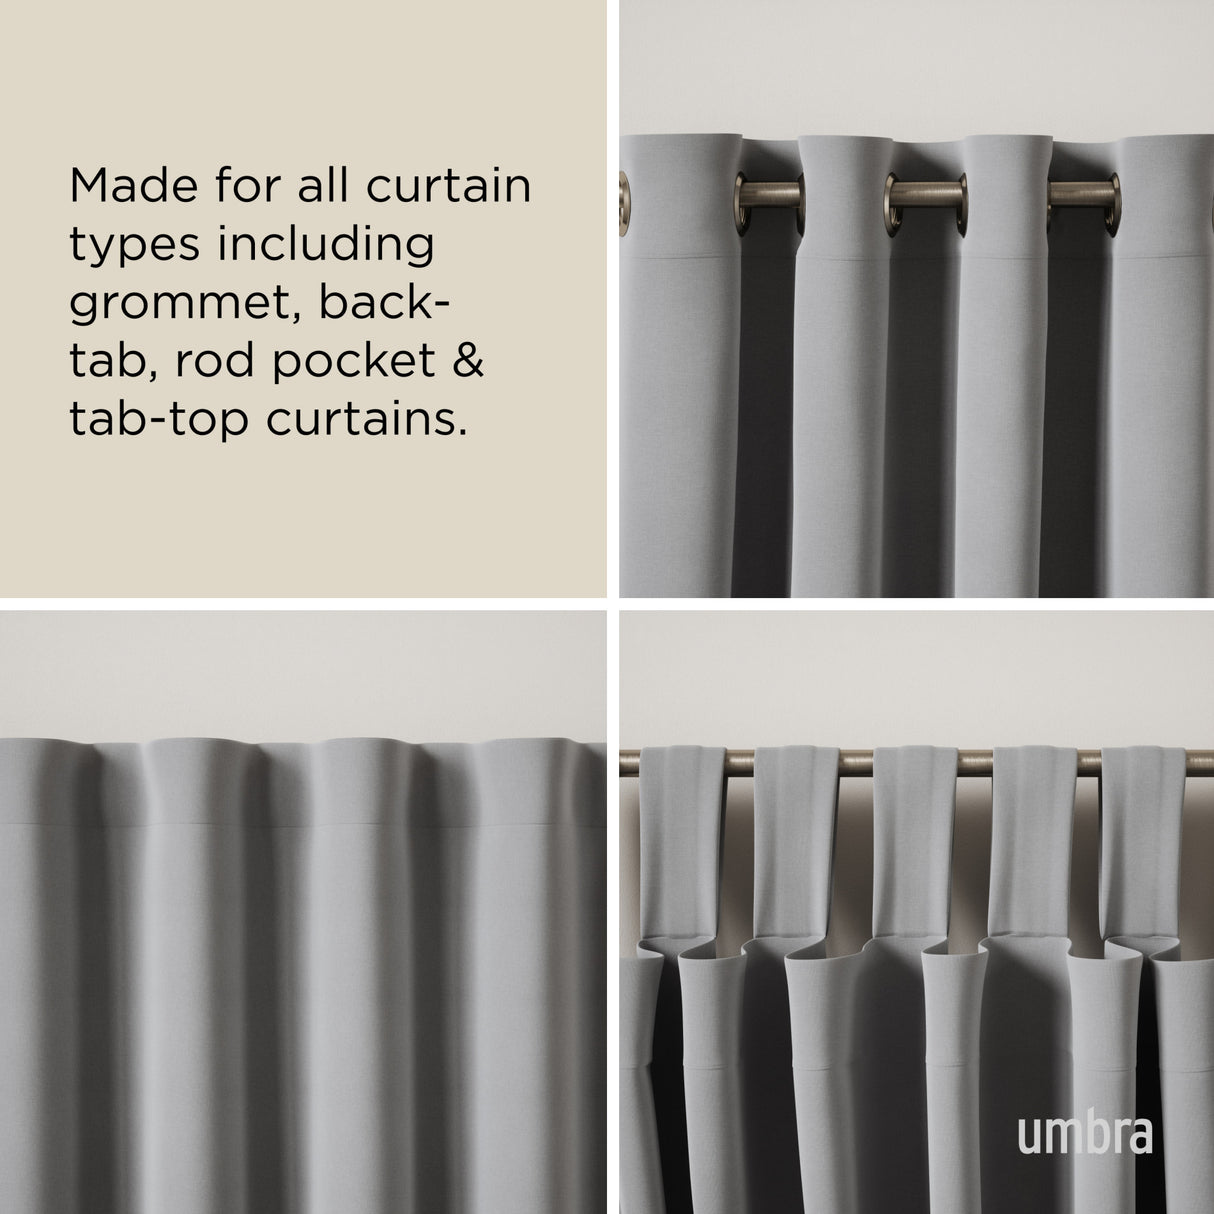 Single Curtain Rods | color: Nickel-Steel | size: 36-72" (91-183 cm) | diameter: 1 1/4" (3.2 cm)